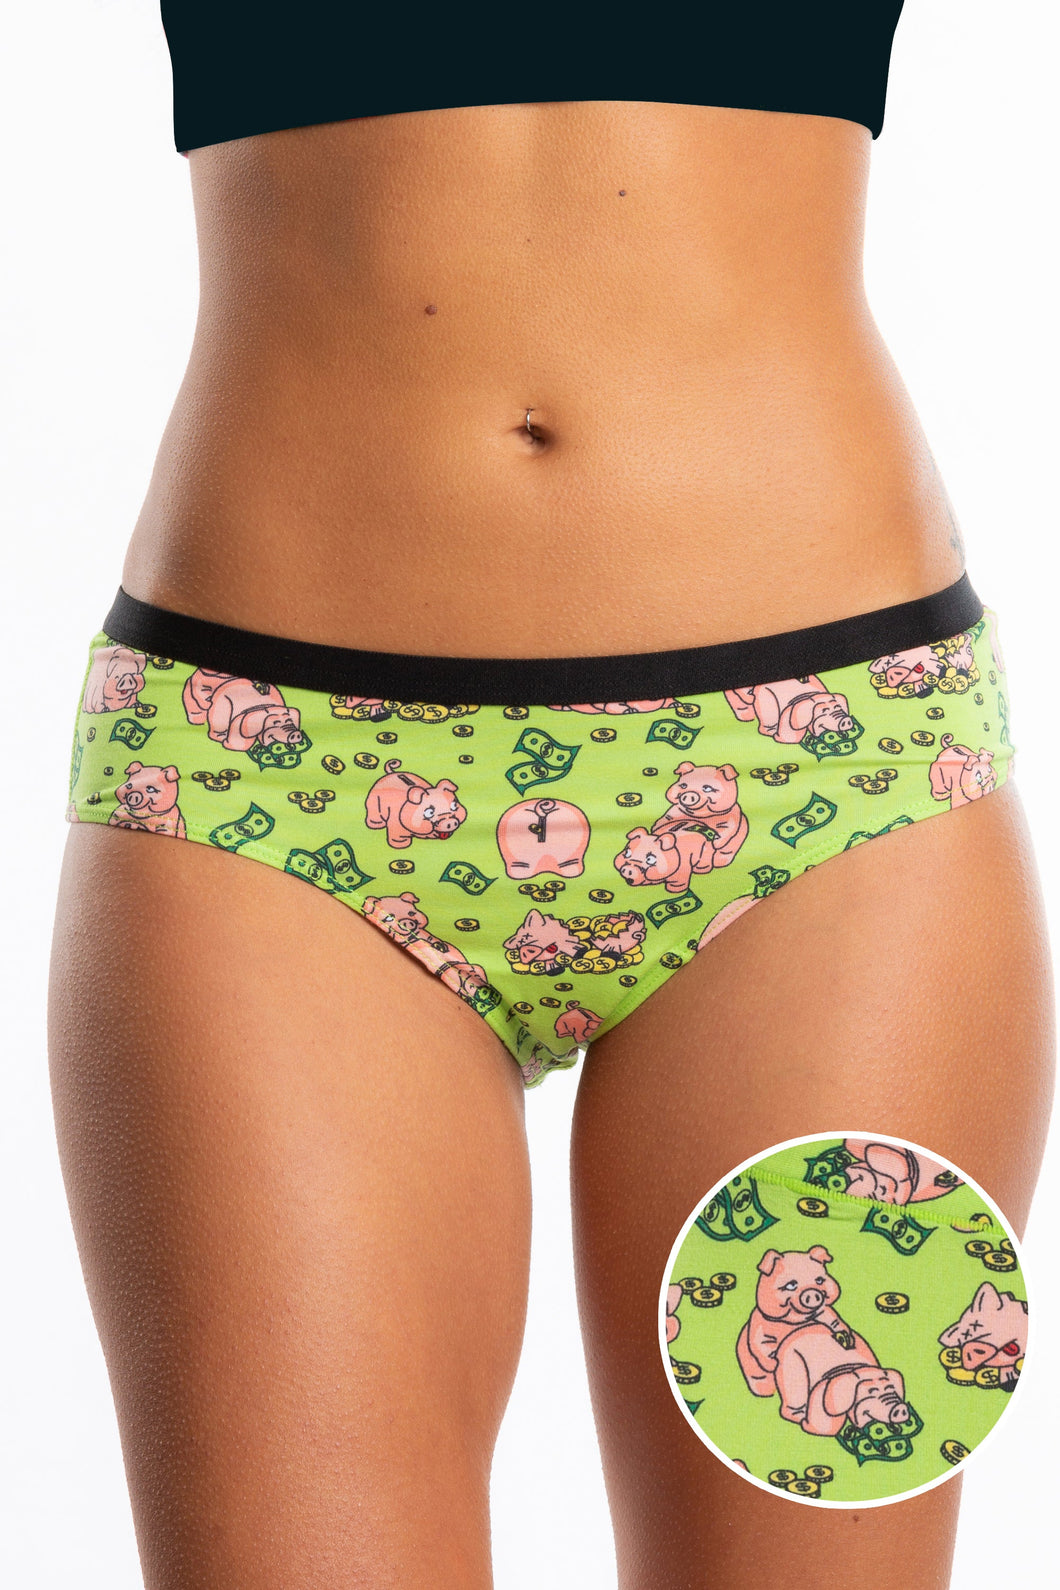 The Hog Heaven | Piggy Bank Cheeky Underwear